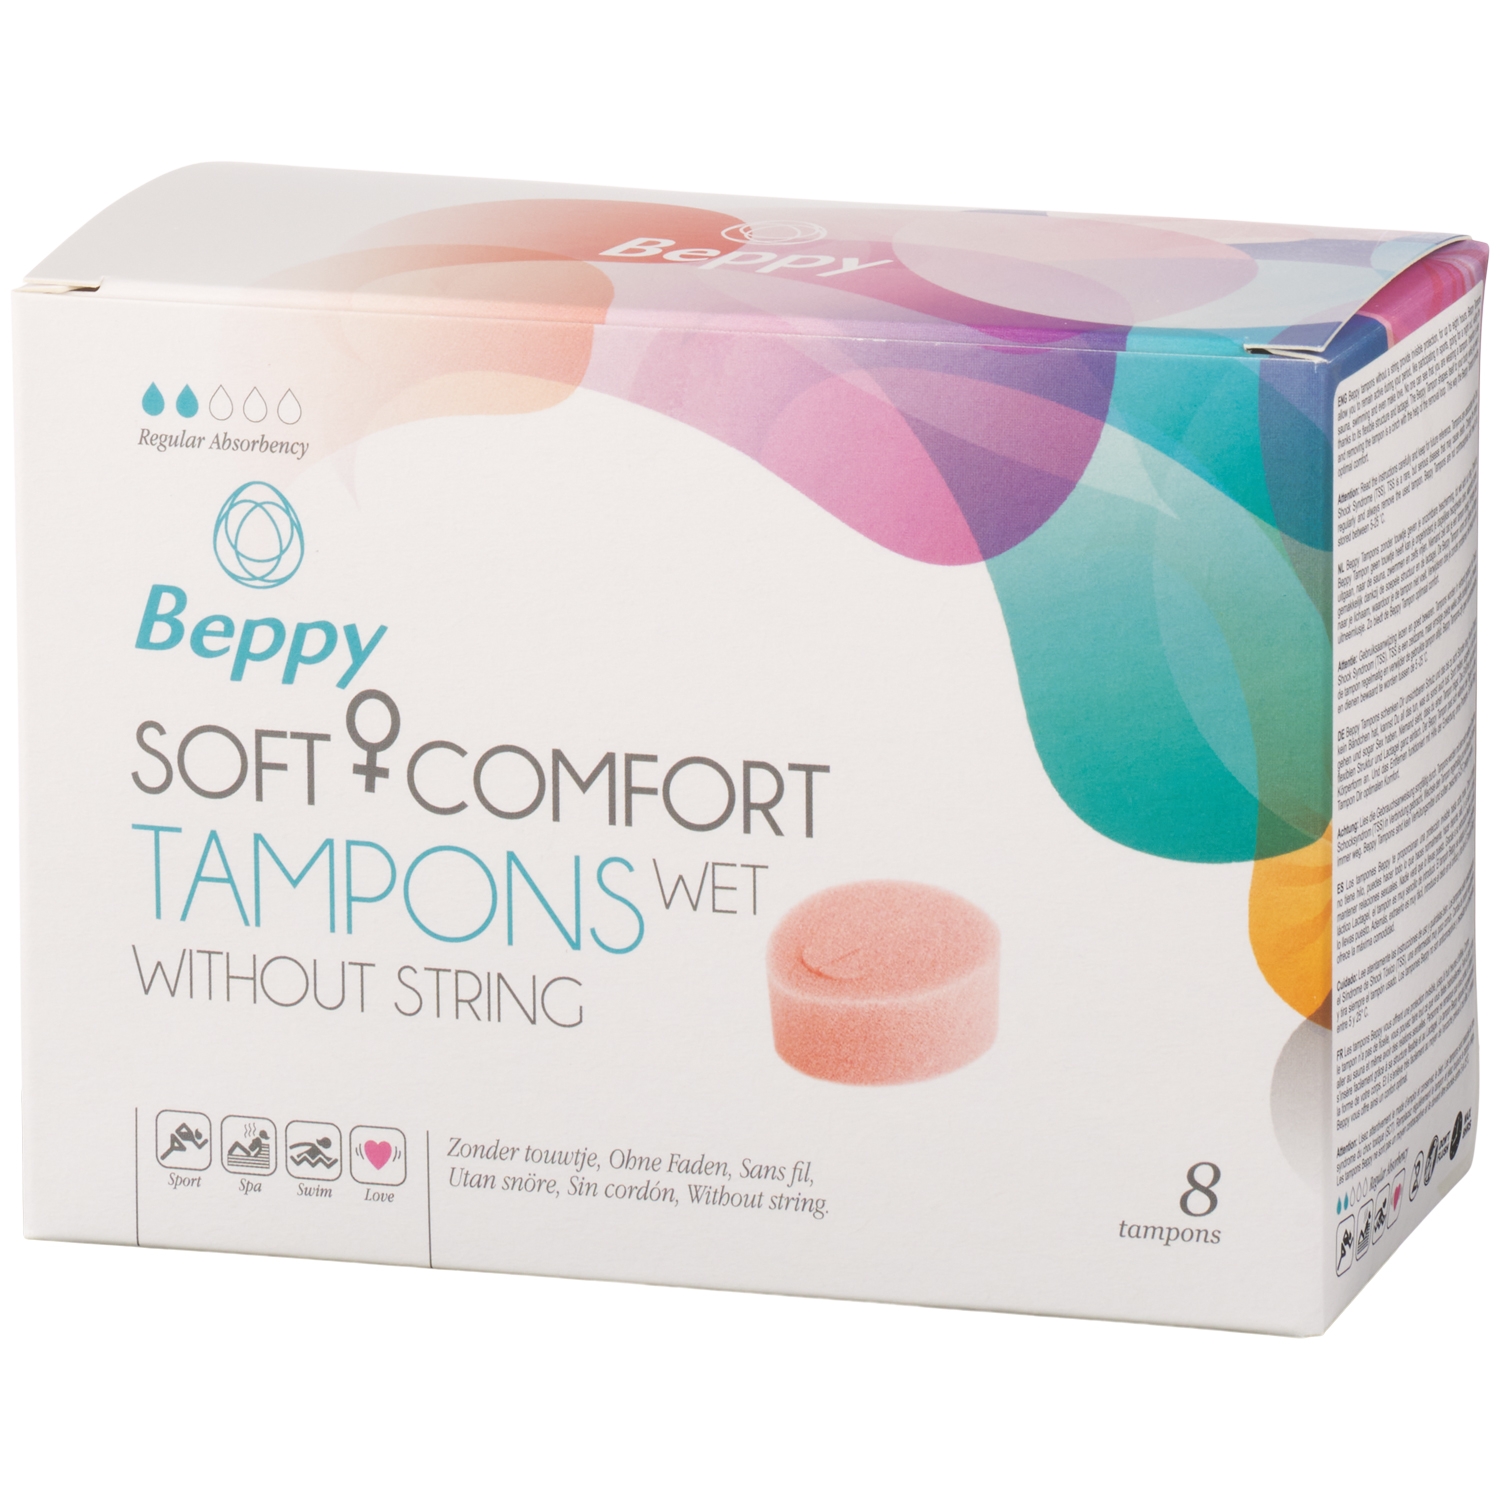 Beppy Beppy Soft + Comfort Tampons Wet 8 pcs - Lyserosa